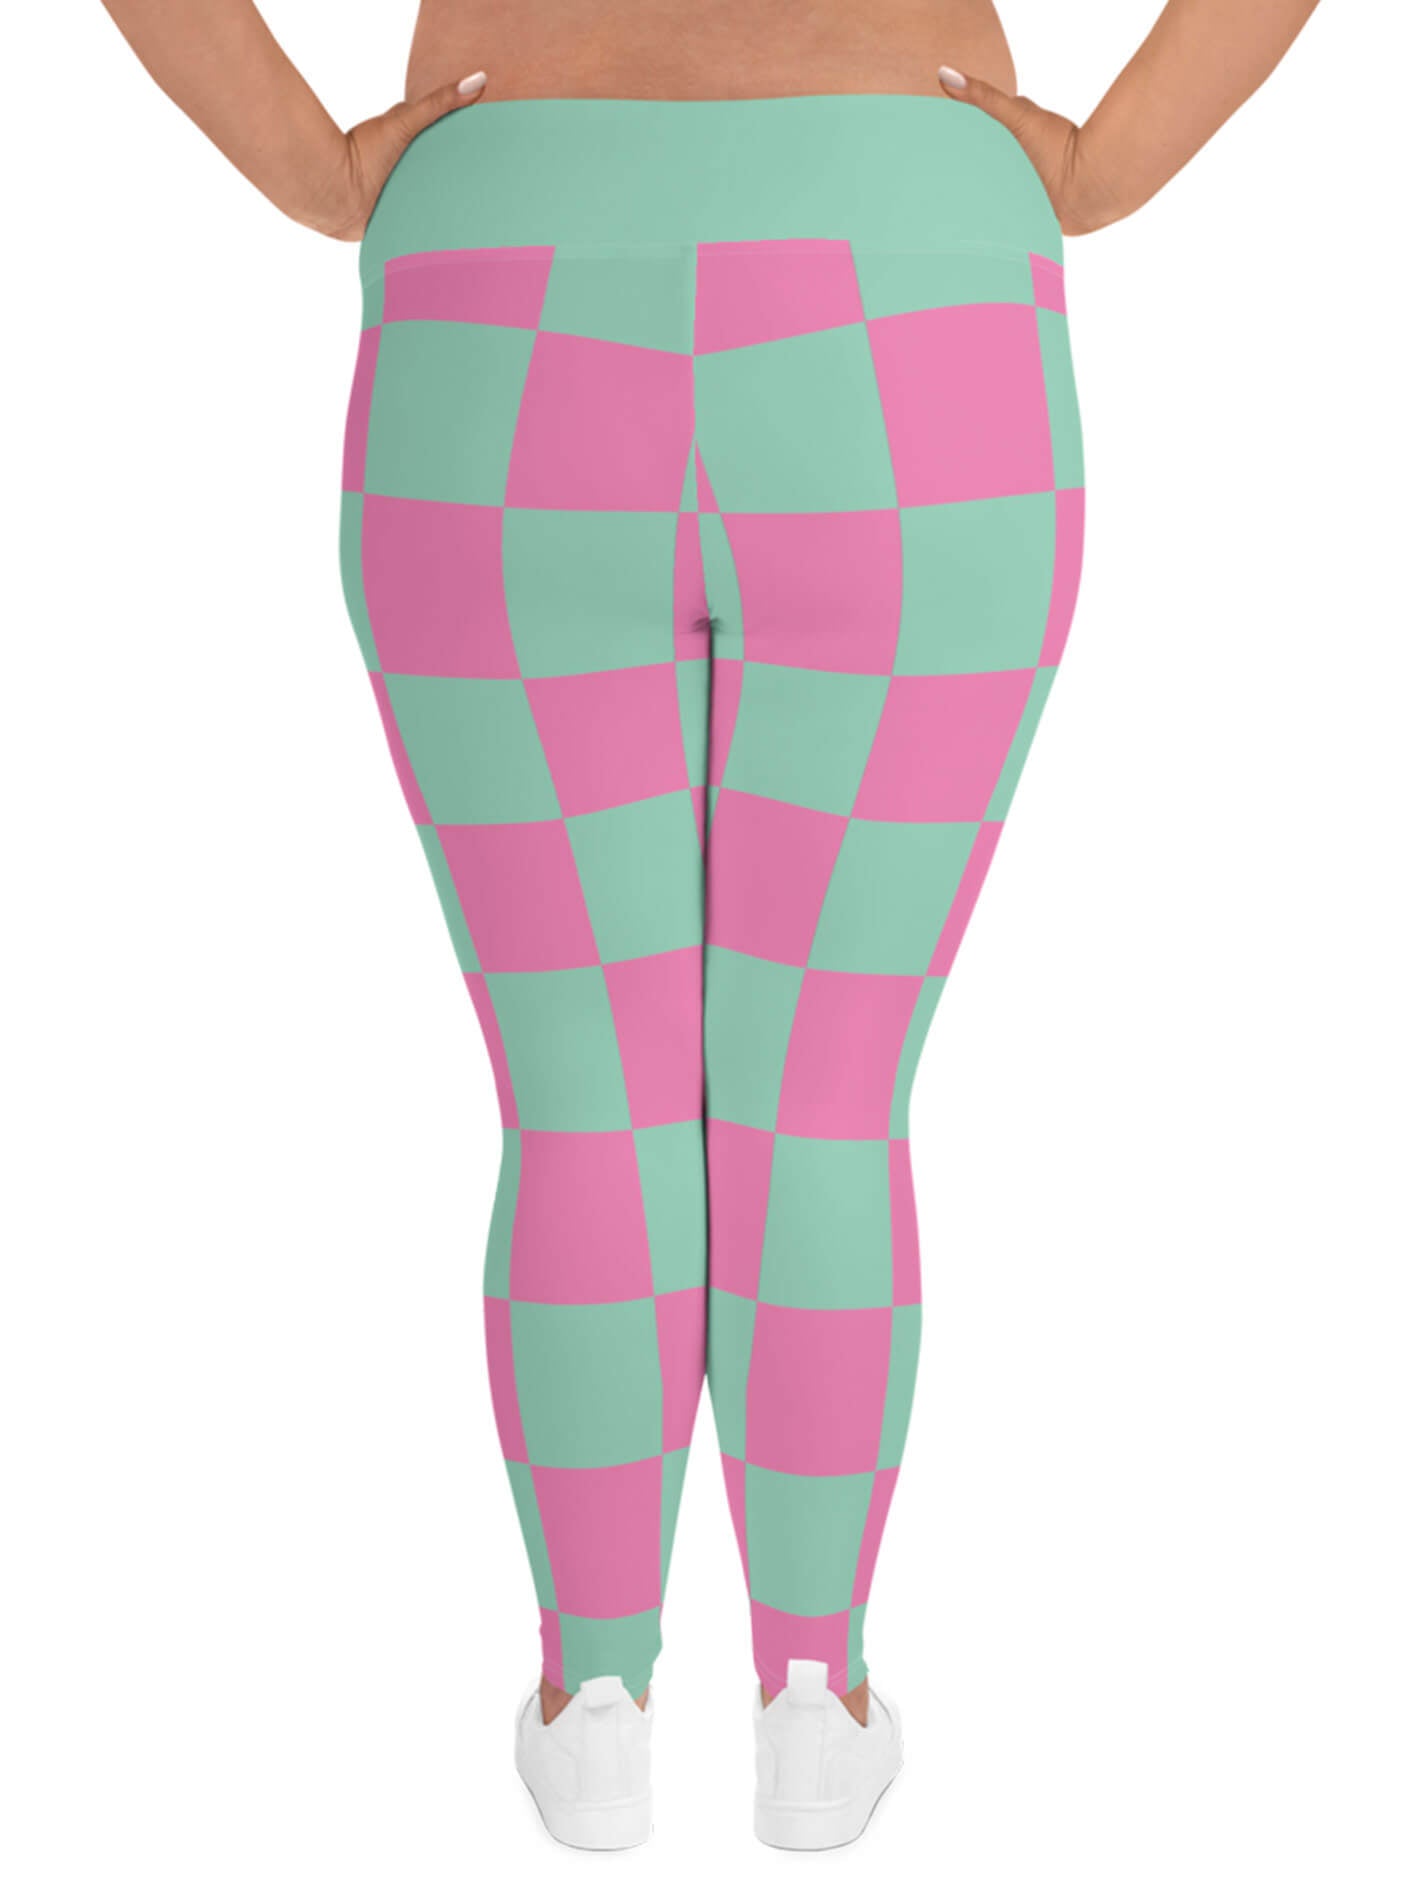 Colorful checker pattern leggings.